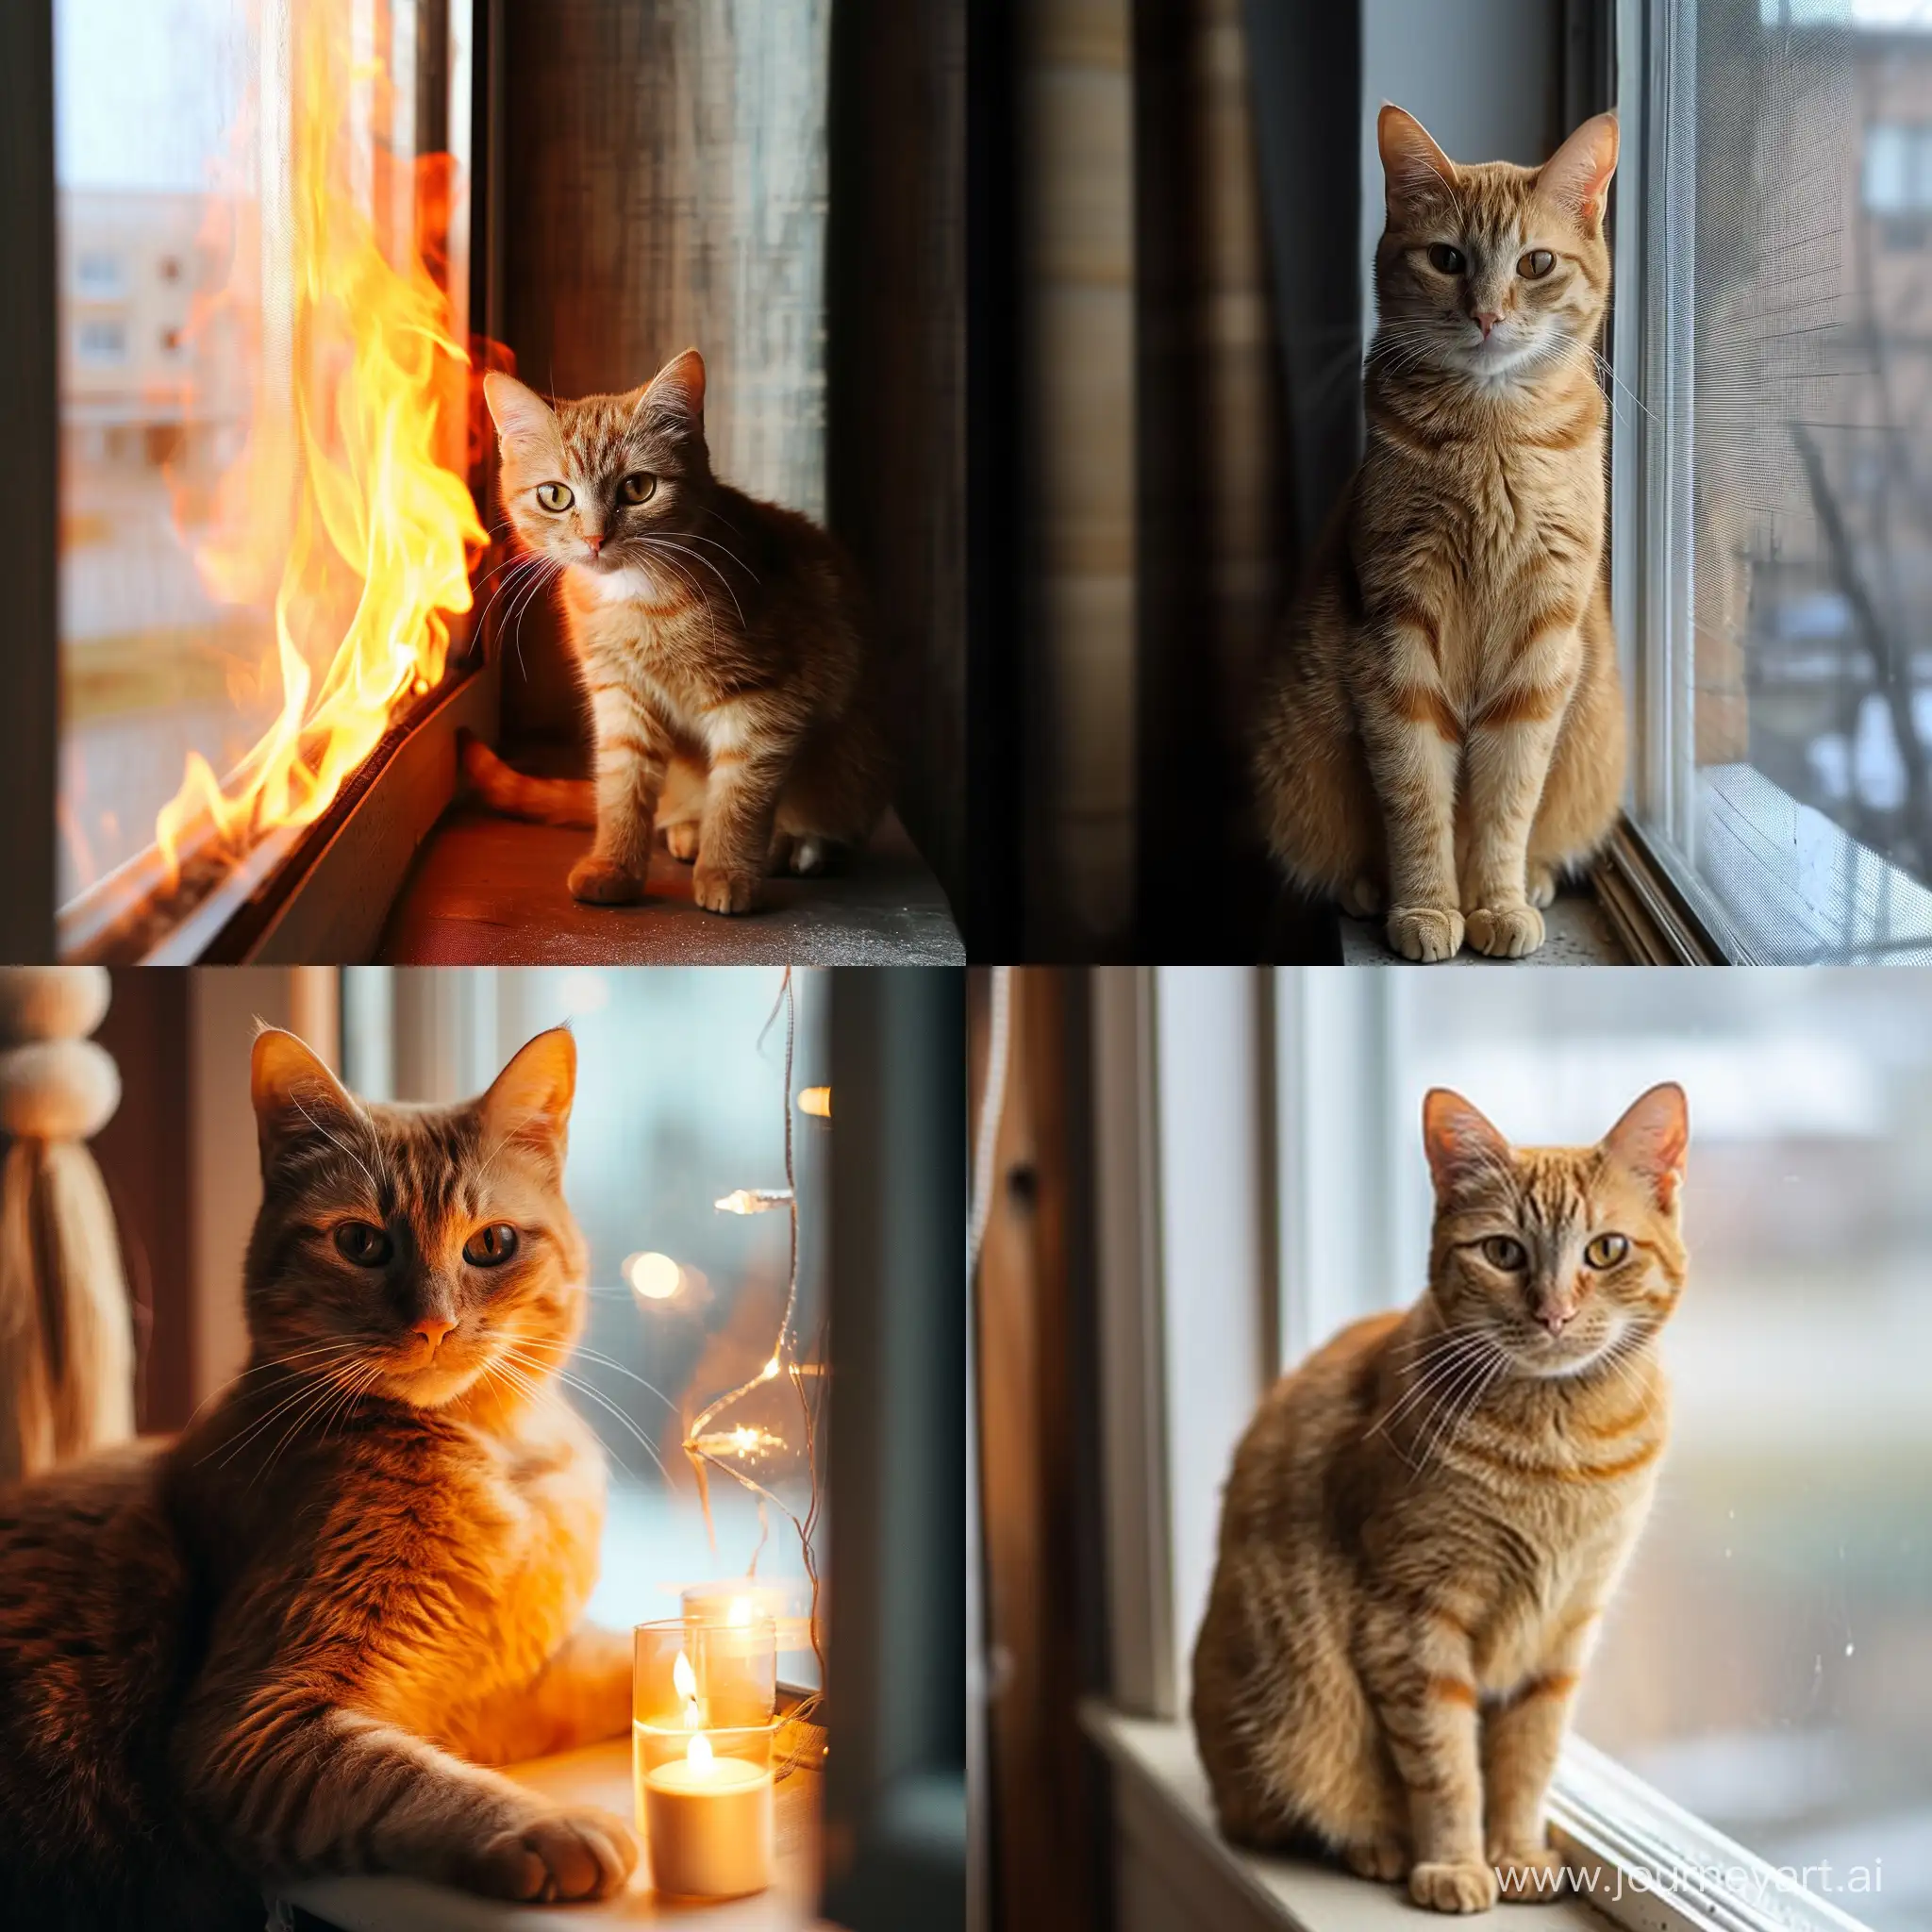 https://i.postimg.cc/9MQh1vKj/IMG-20240121-110211-686.jpg A fire cat is sitting on a windowsill, looking at the camera